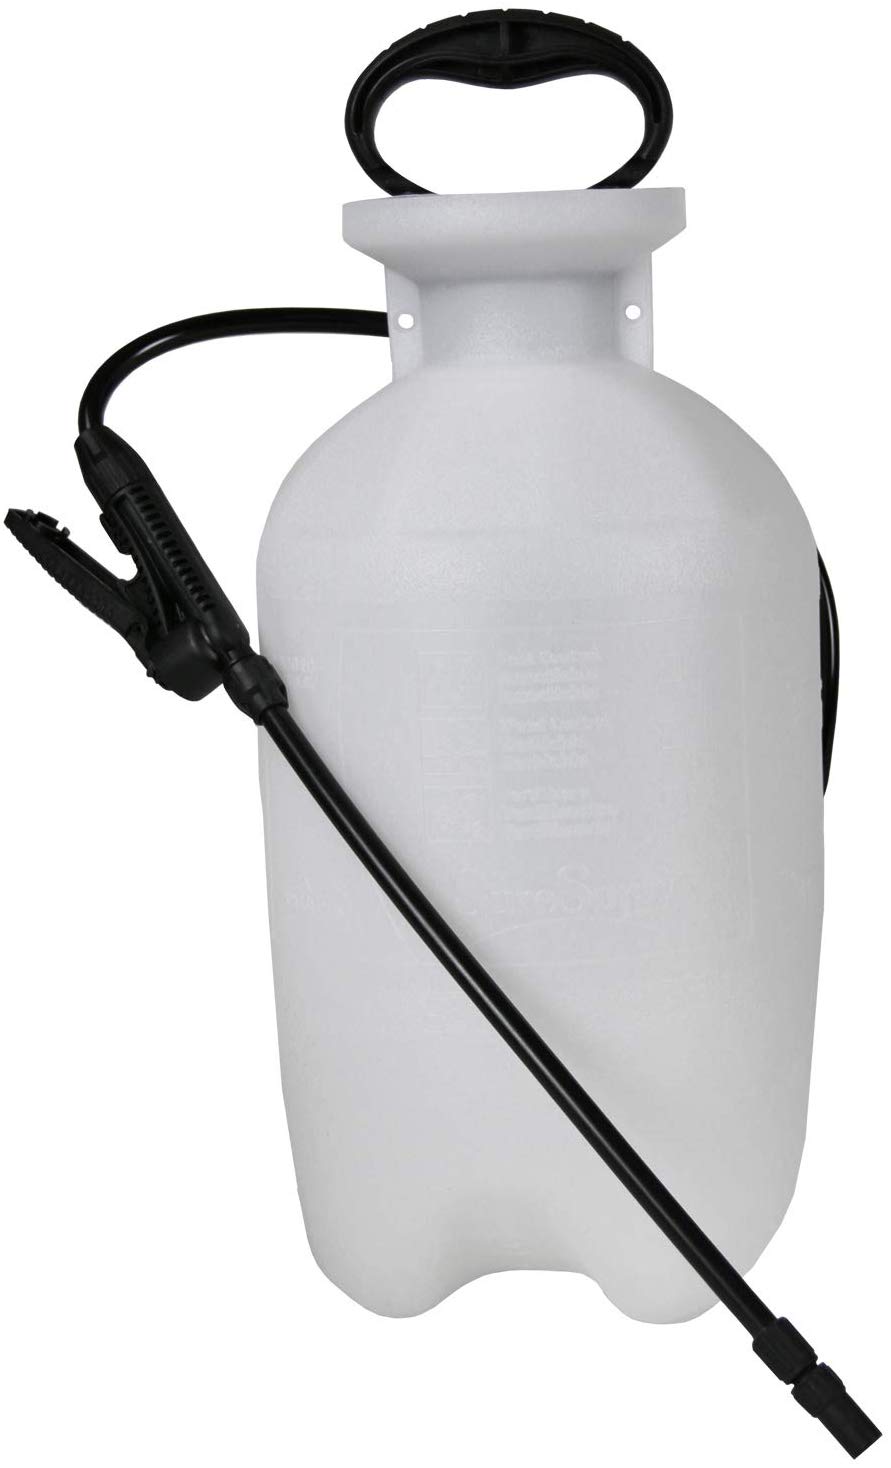 Chapin 2-Gallon Pump Sprayer